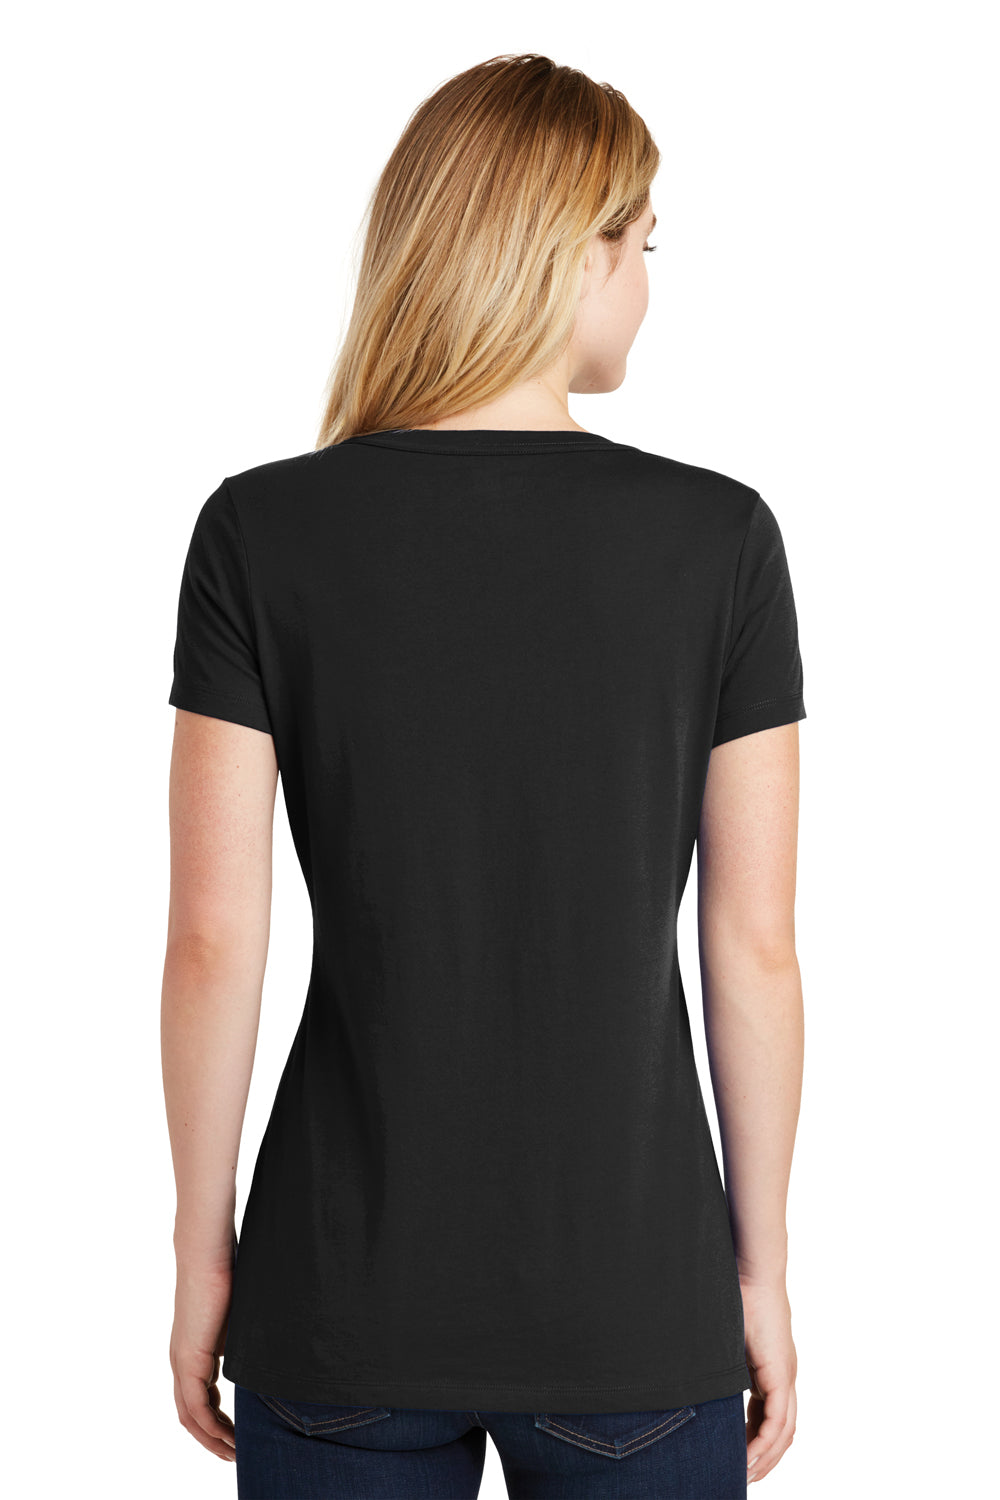 New Era LNEA101 Womens Heritage Short Sleeve V-Neck T-Shirt Black Back